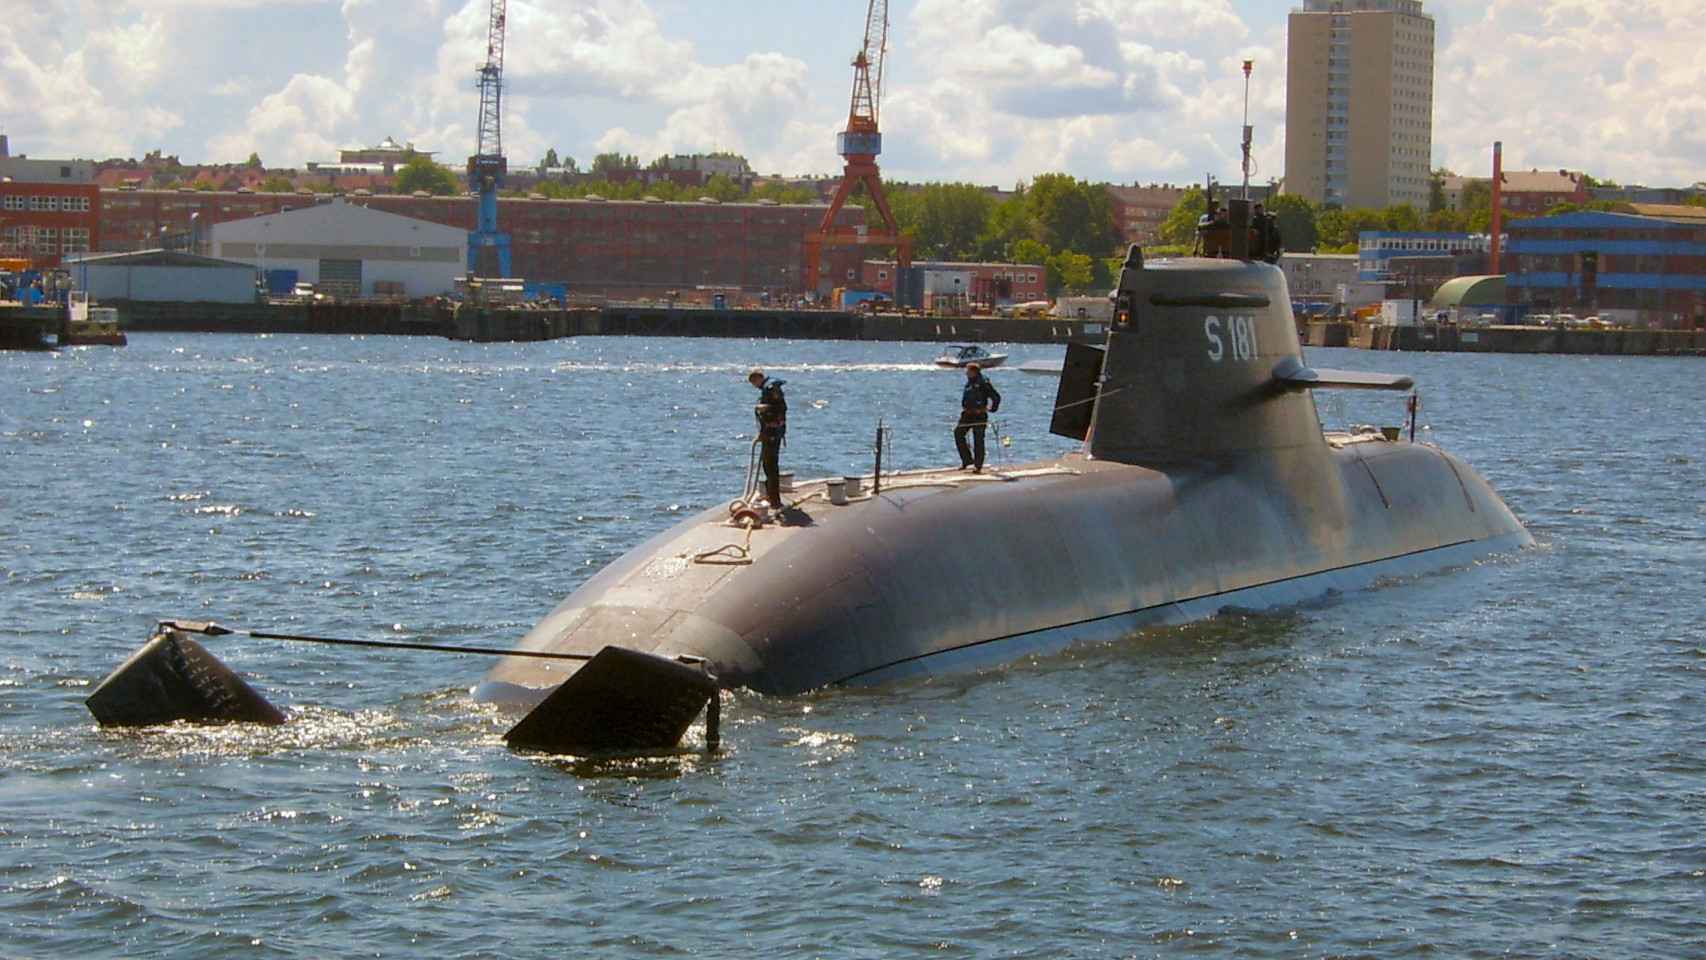 Submarino Clase 212